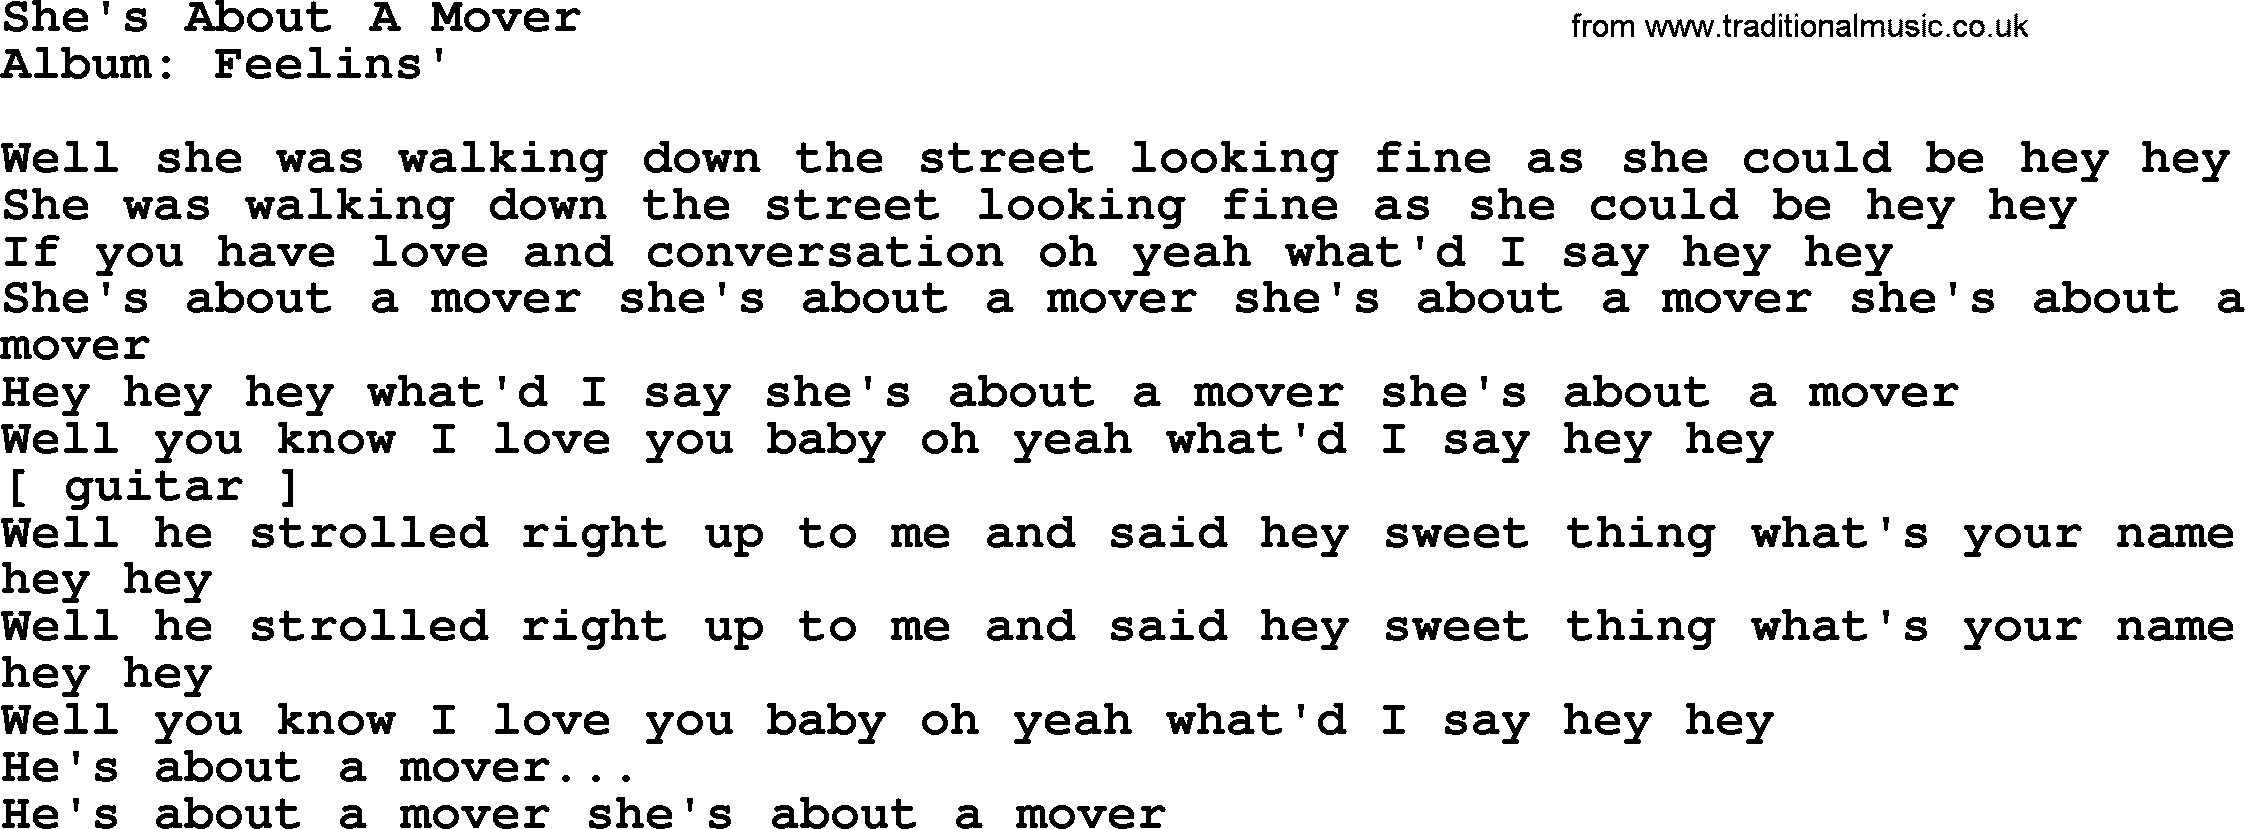 Loretta Lynn song: She's About A Mover lyrics